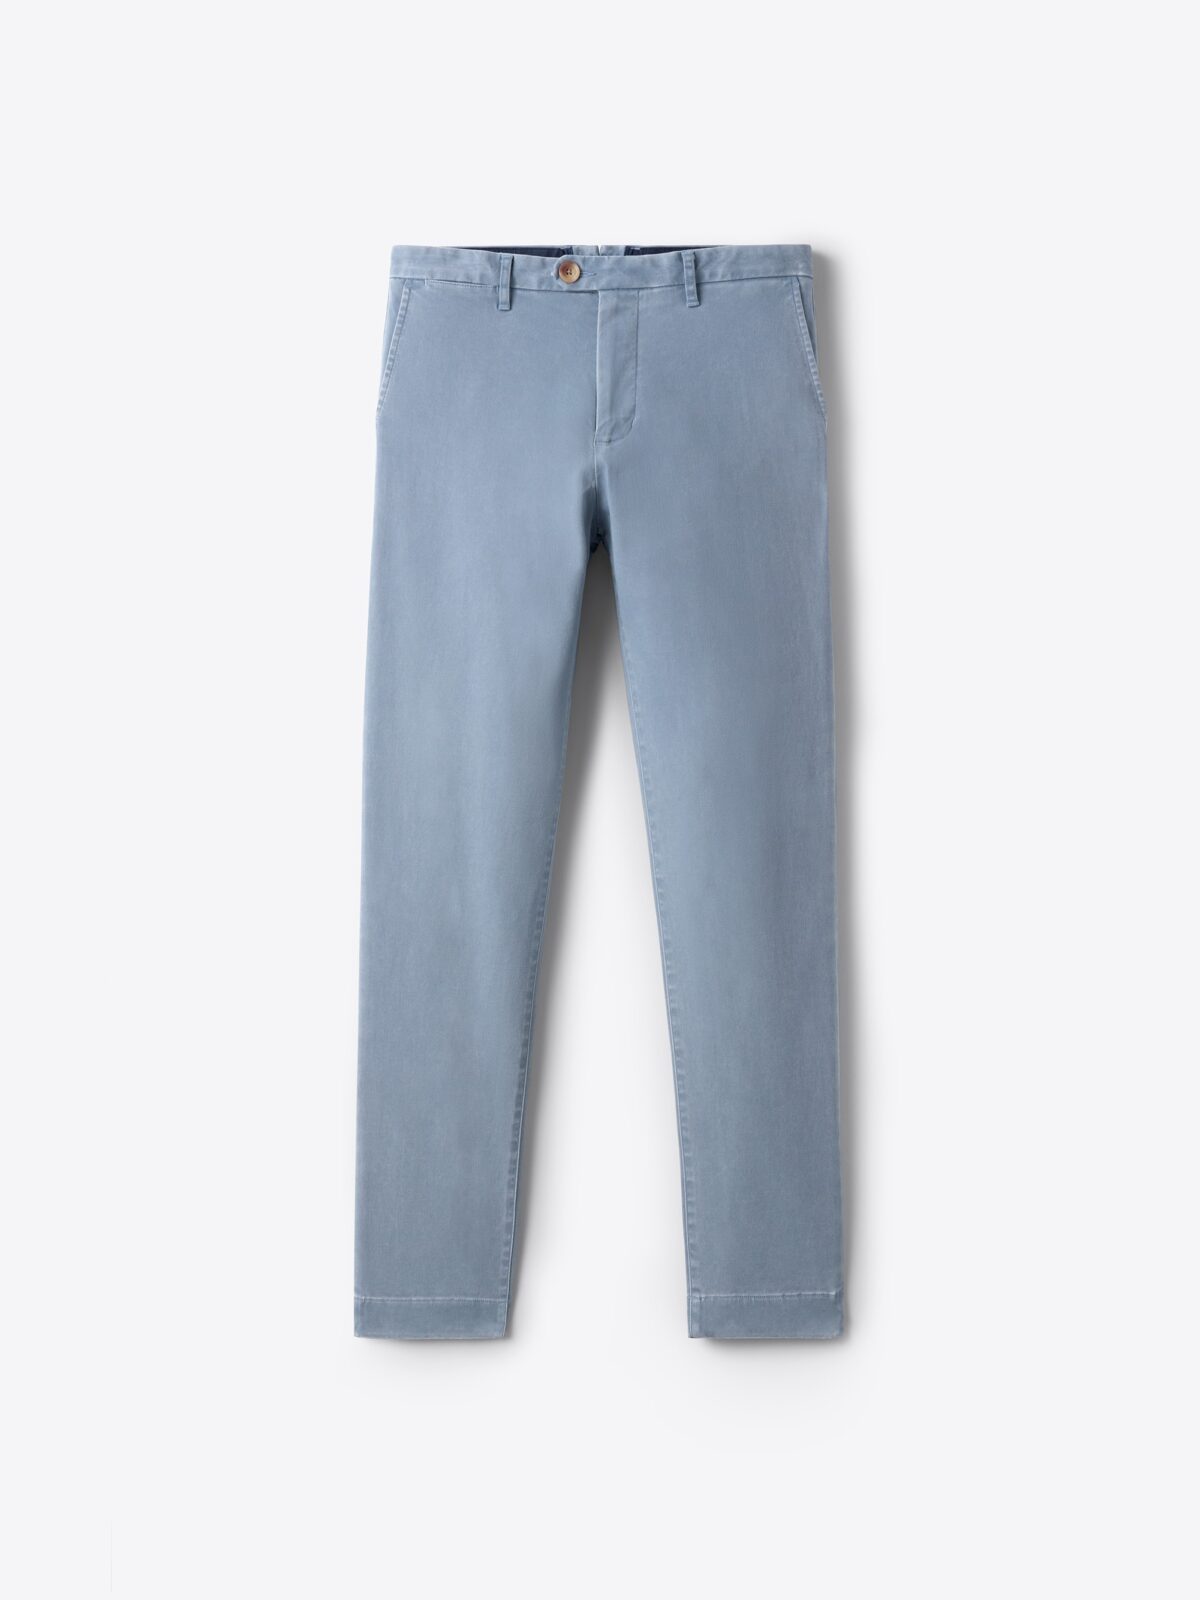 Di Sondrio Grey Stretch Canvas Chino - Custom Fit Pants